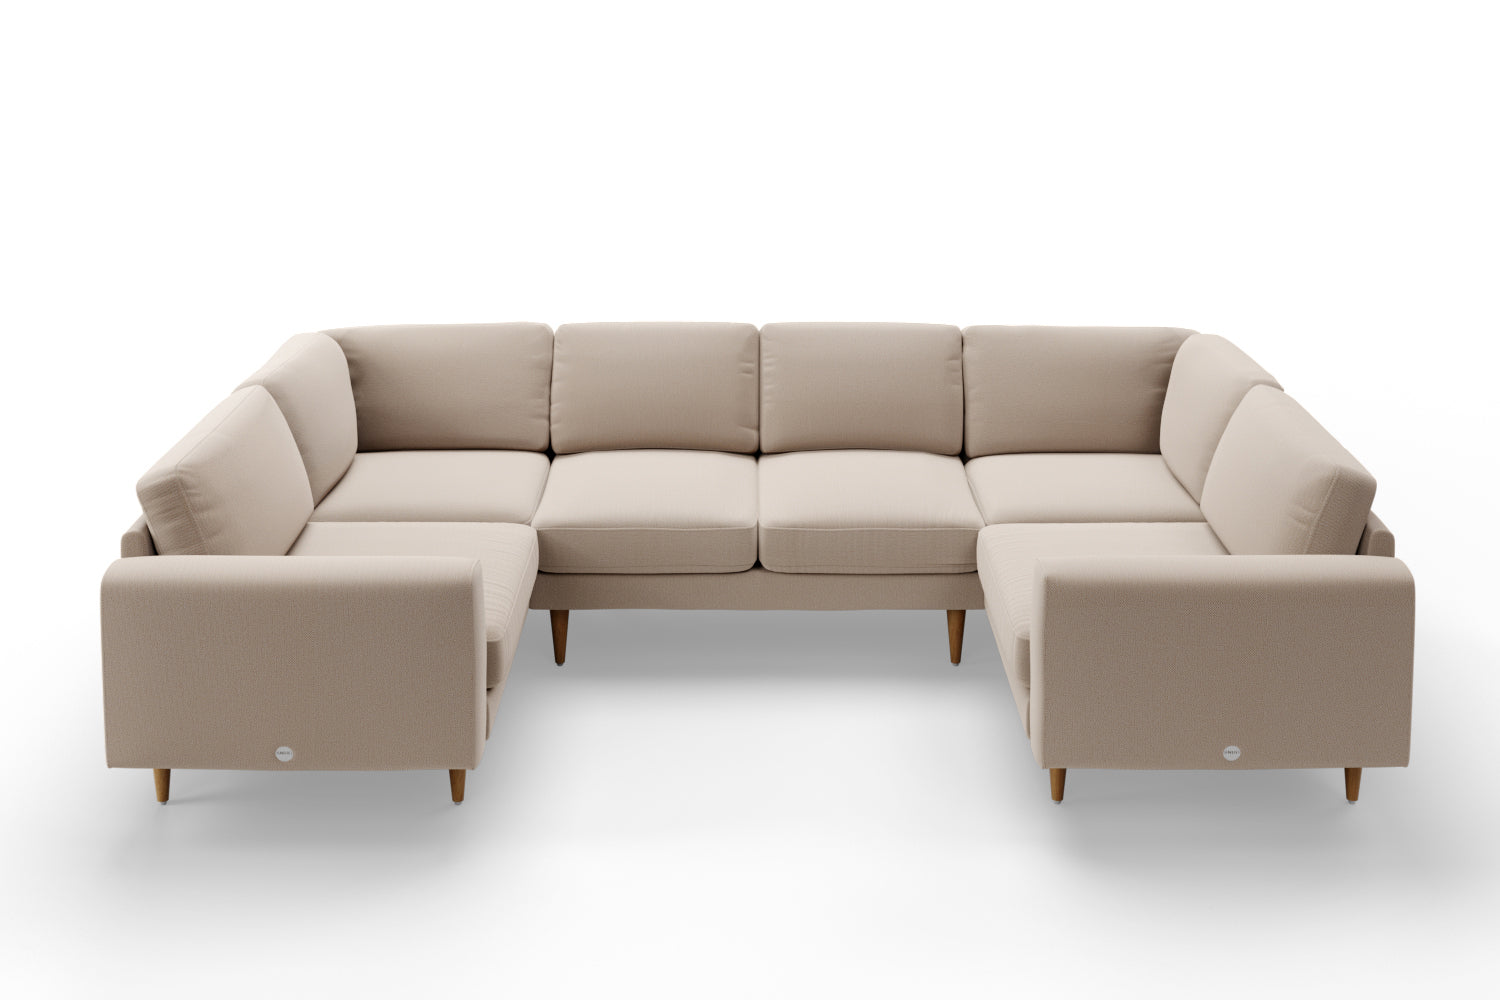 SNUG | The Big Chill Corner Sofa Medium in Oatmeal